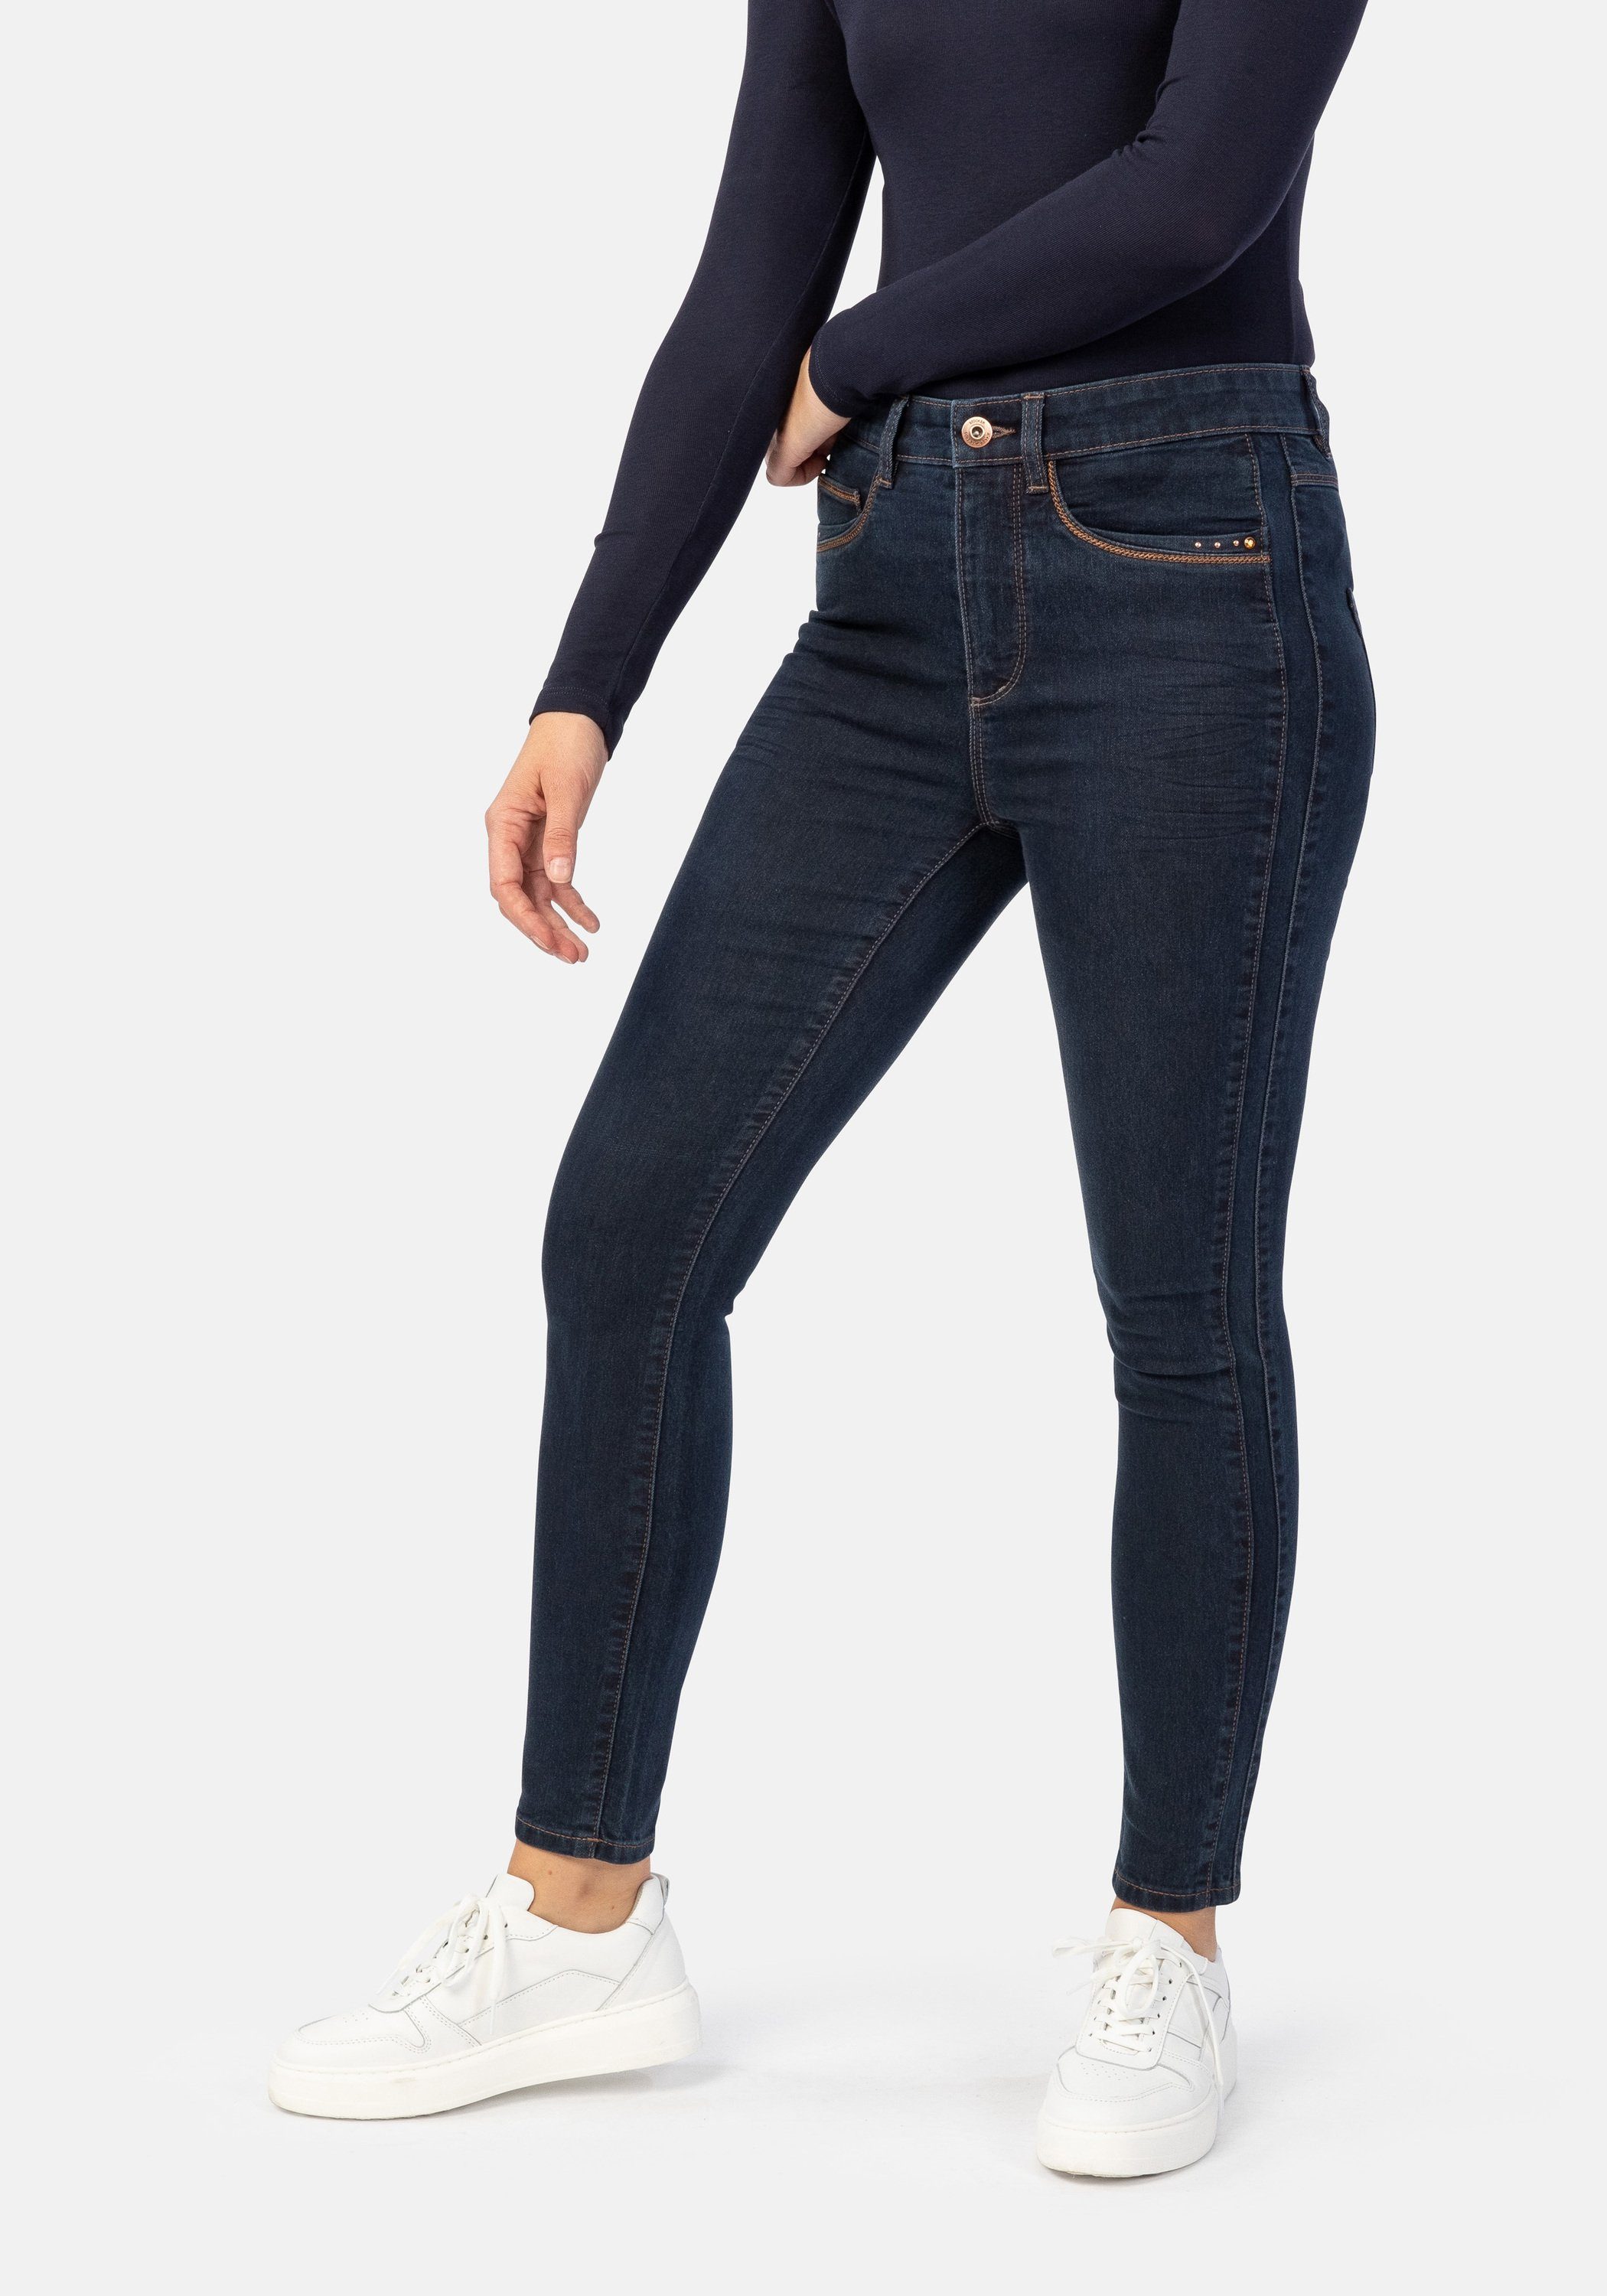 Denim blue Season 5-Pocket-Jeans Skinny STOOKER WOMEN Fit Rio rinse